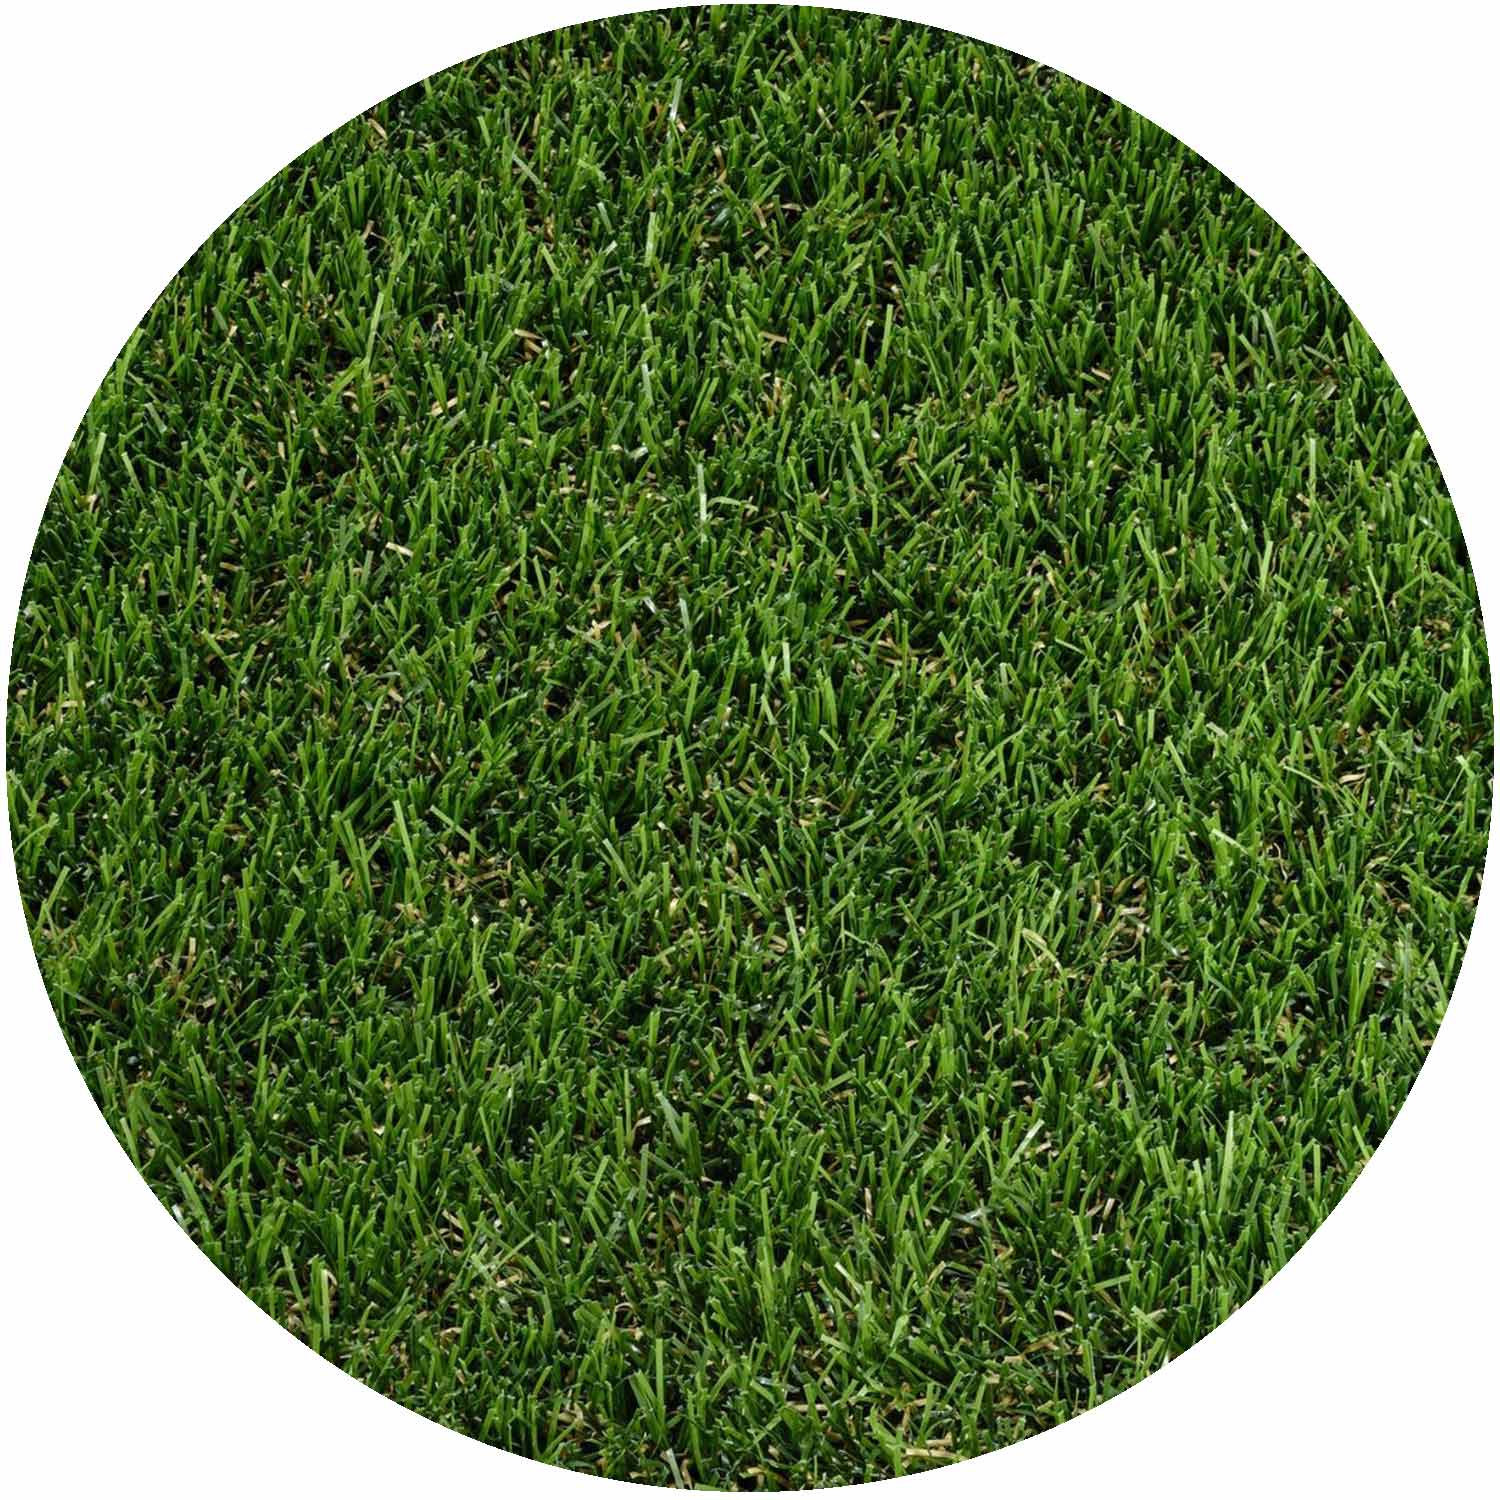 Lincoln 36mm Pile Artificial Grass per mtr